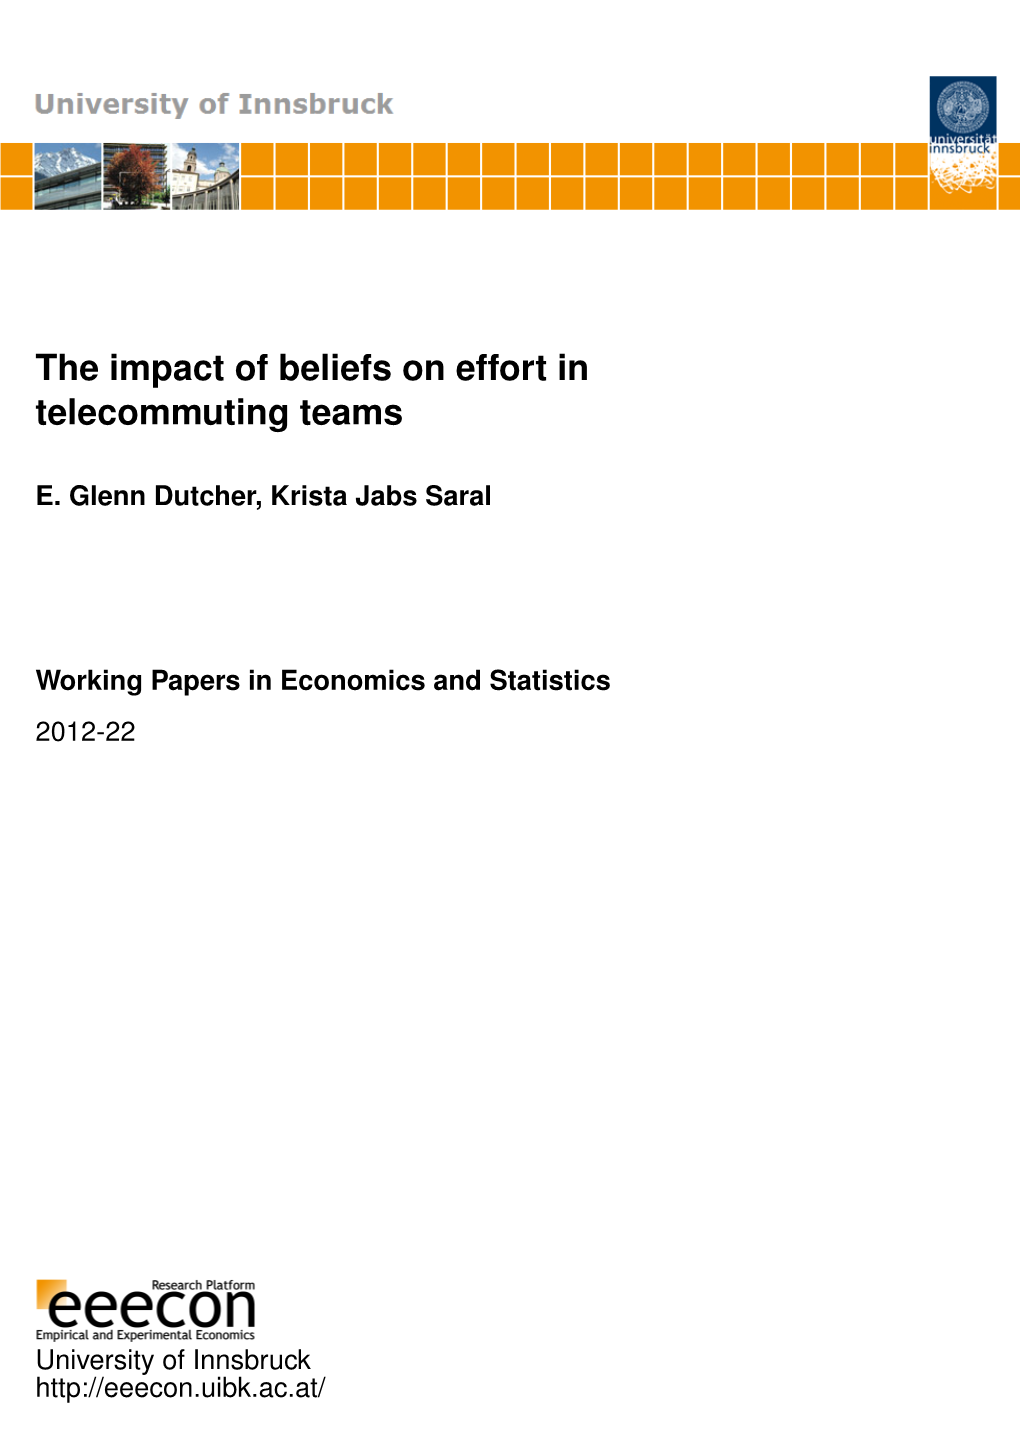 The Impact of Beliefs on Effort in Telecommuting Teams